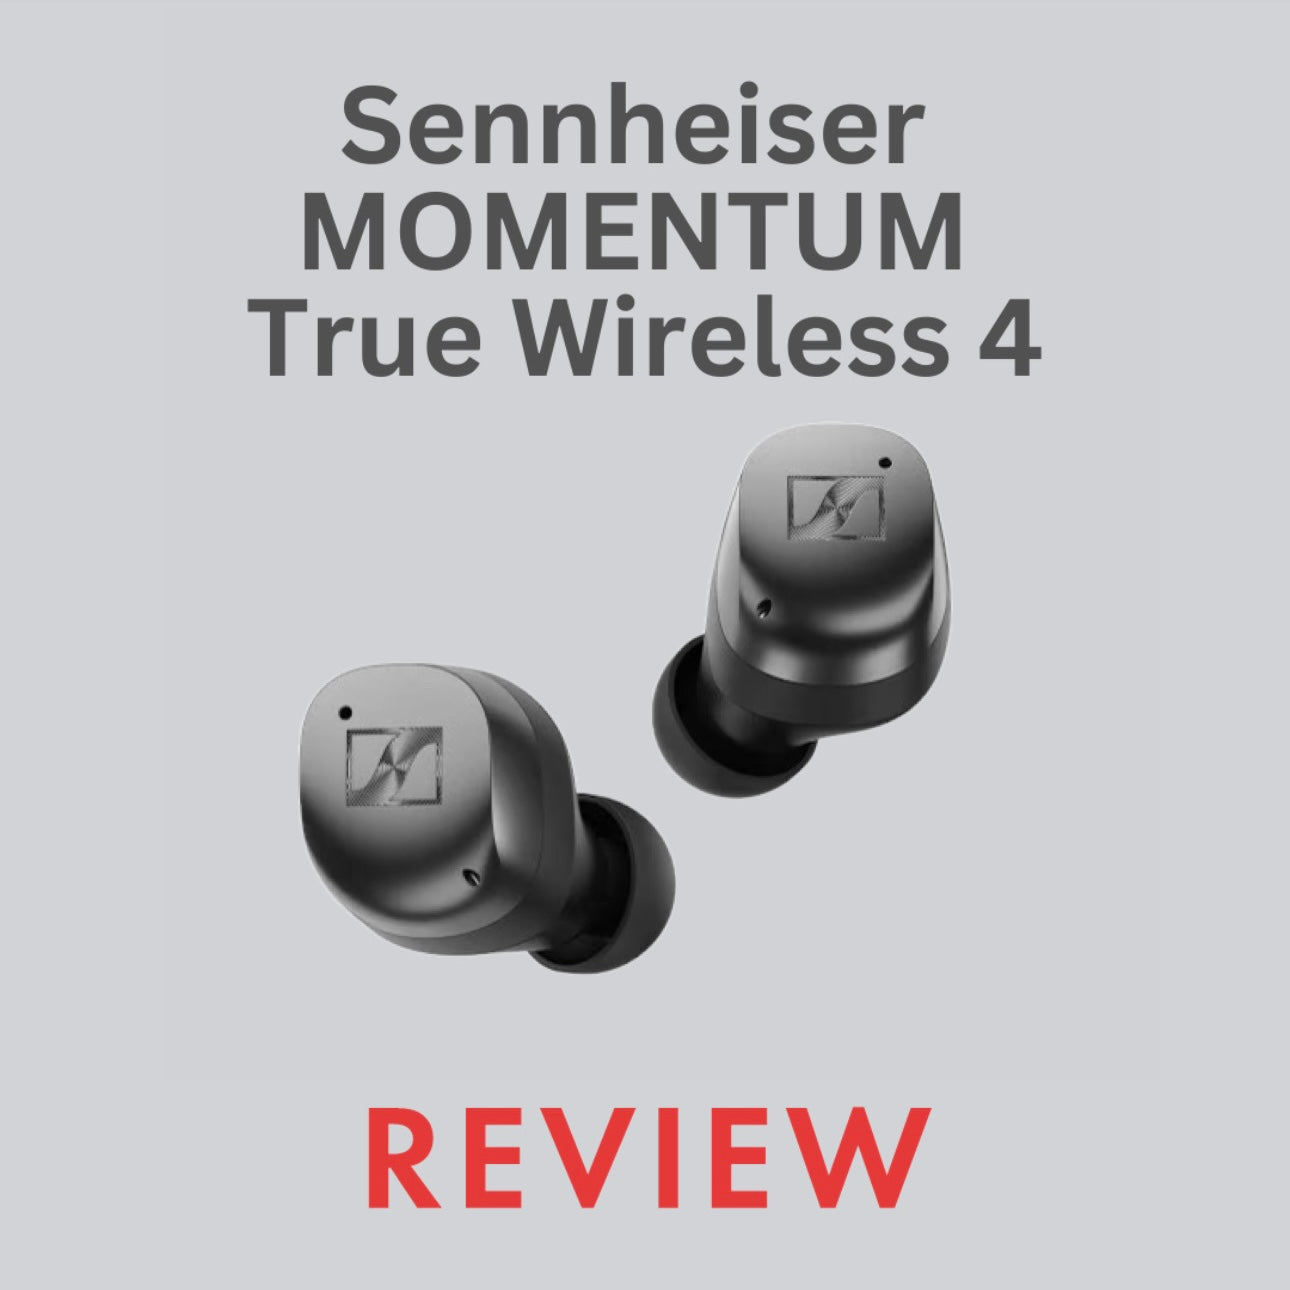 Sennheiser MOMENTUM True Wireless 4 Review